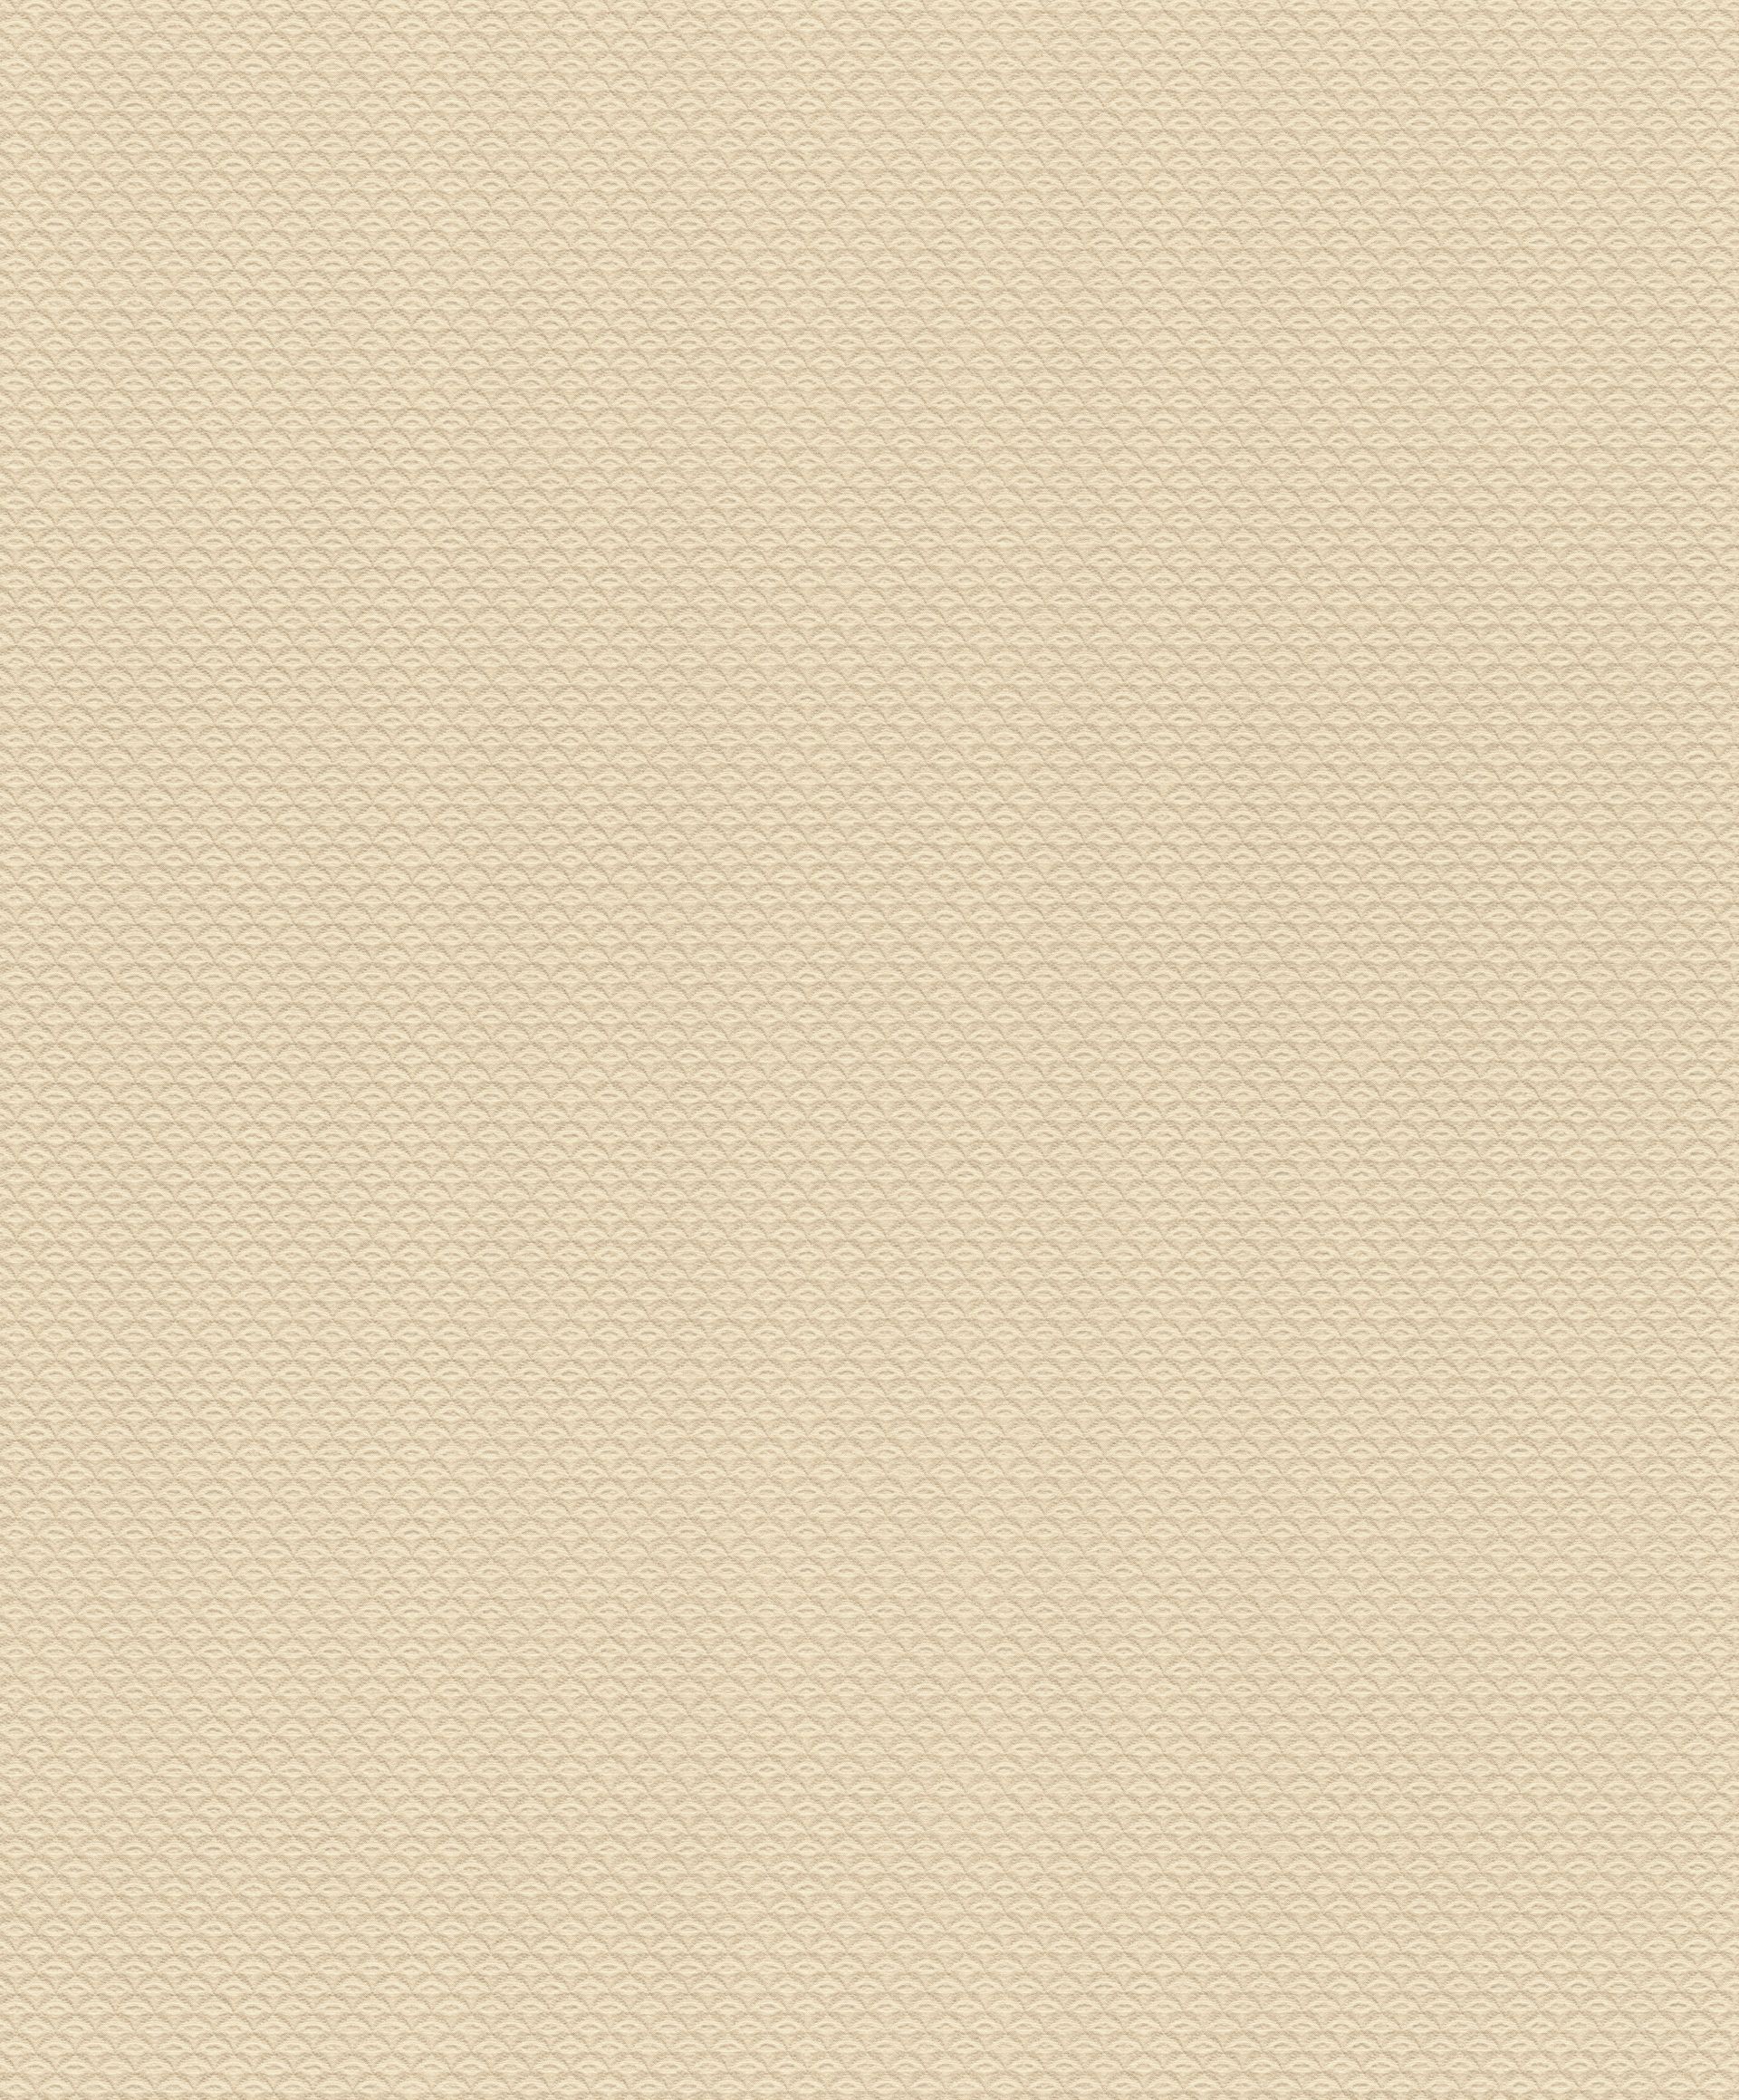 Rasch Trianon XIII, Classic-Chic, beige 570250